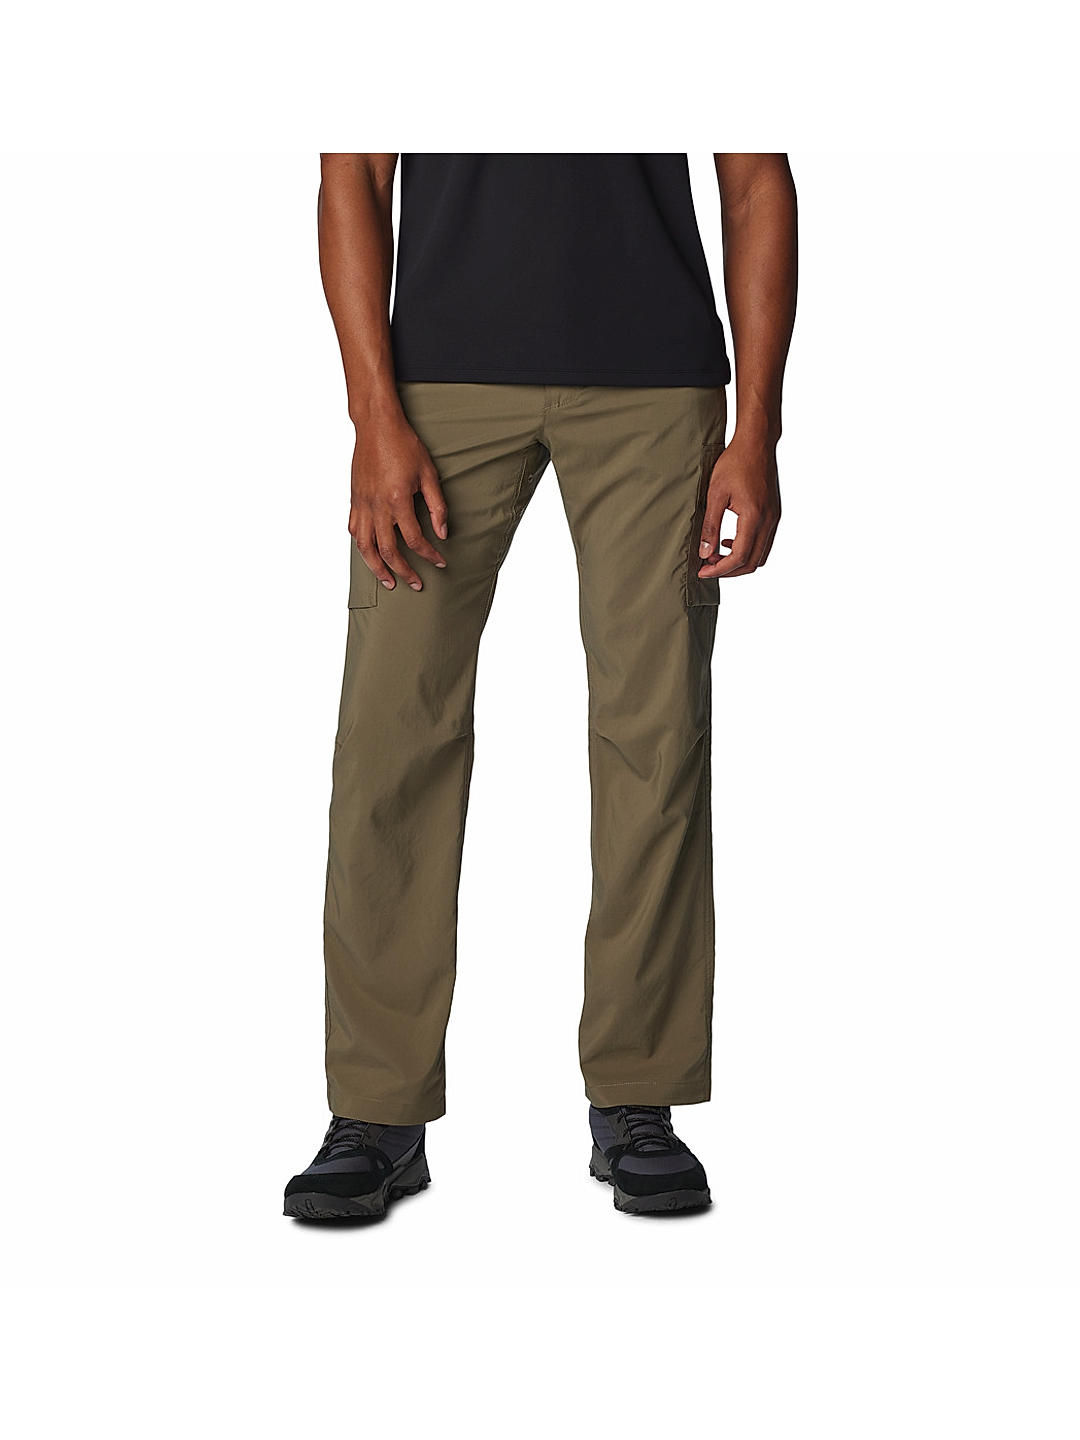 Buy Green Silver Ridge Utility Pant for Men Online at Columbia Sportswear